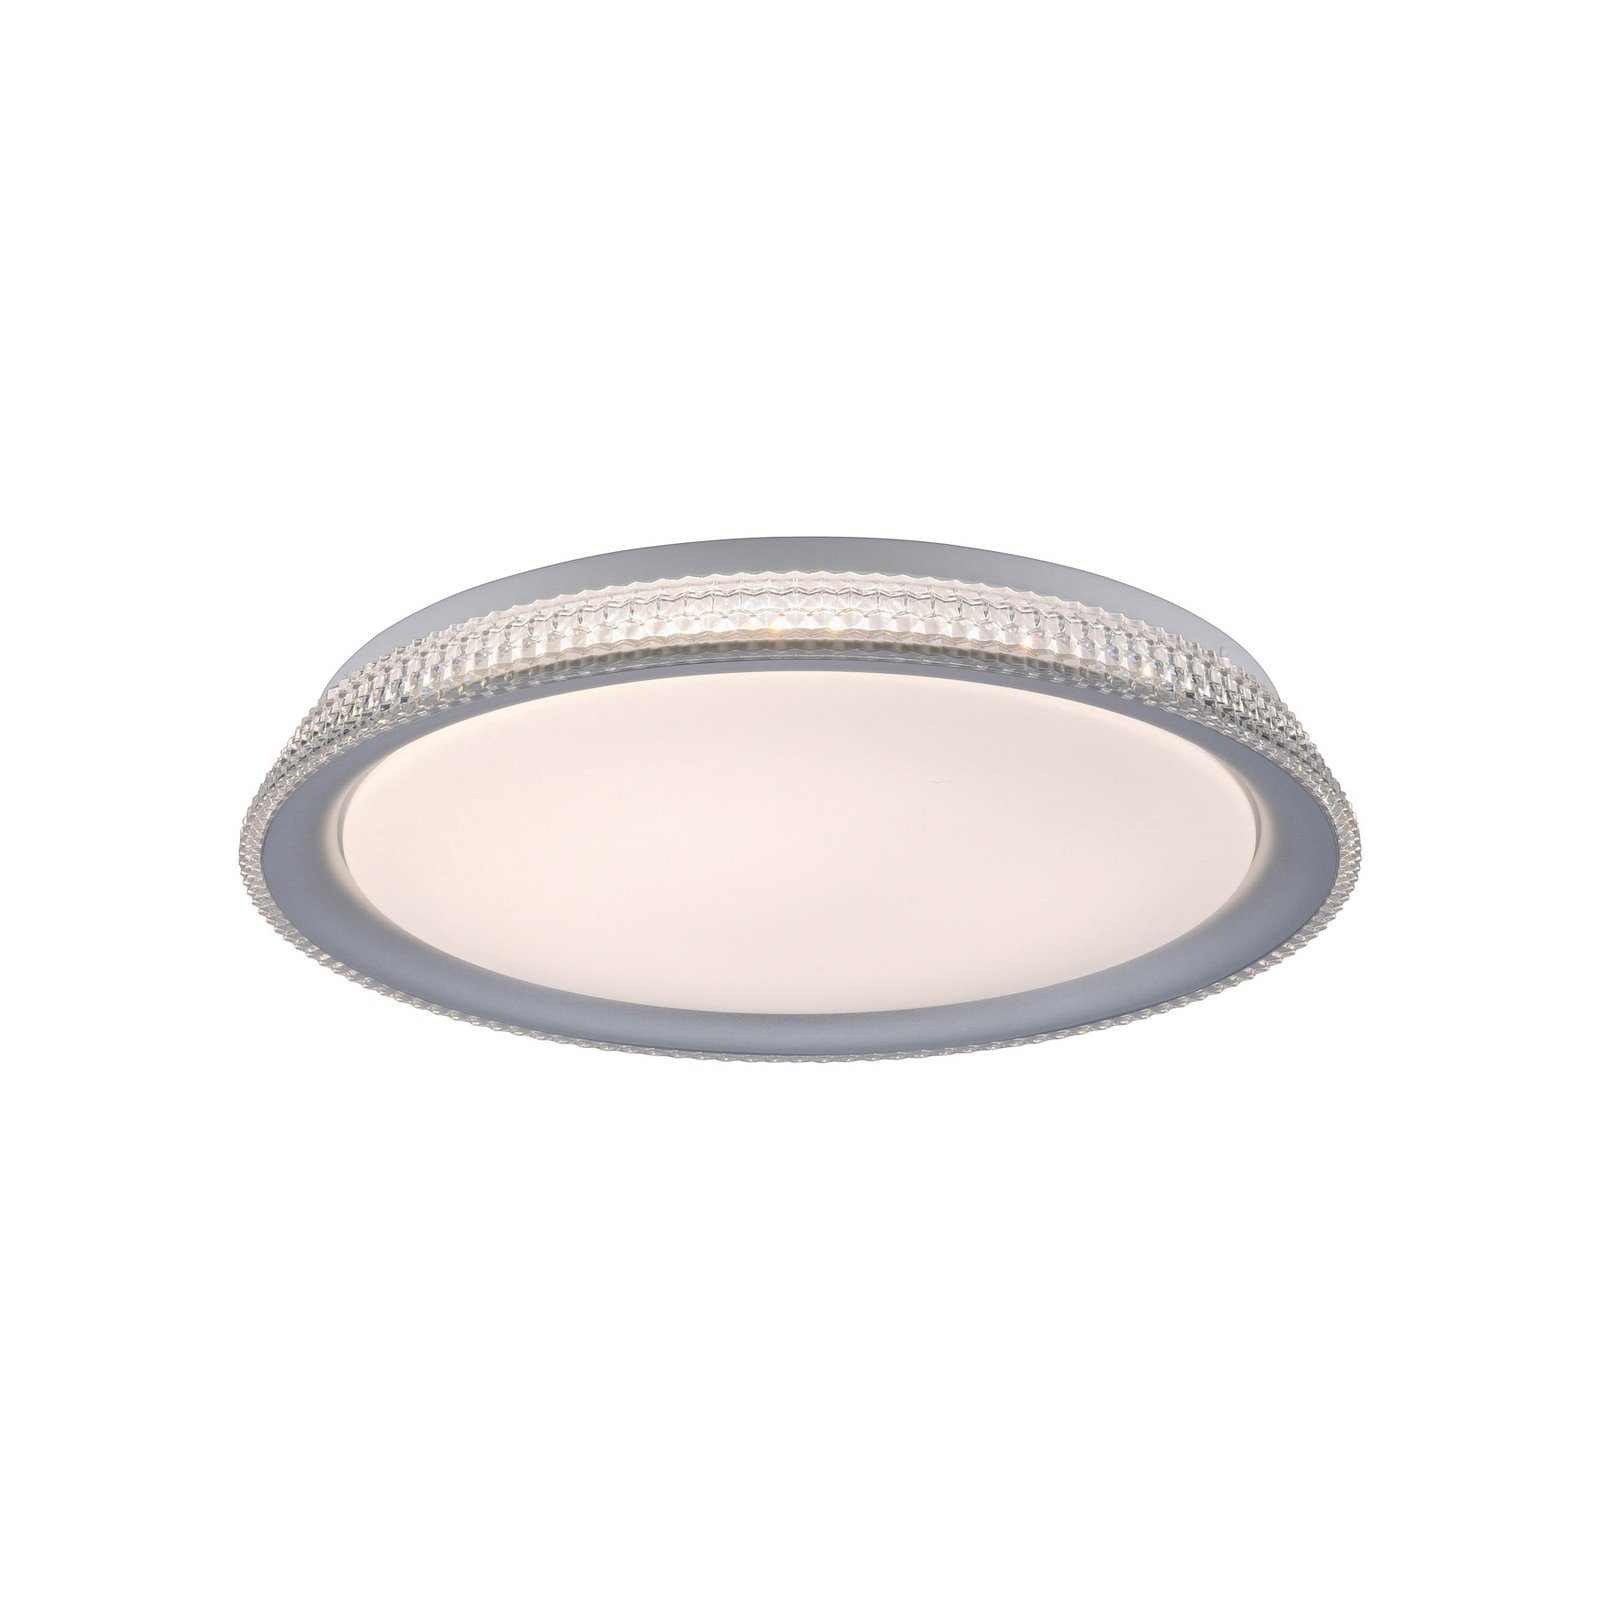 LED ceiling light Kari, dimmable Switchmo, Ø 40cm